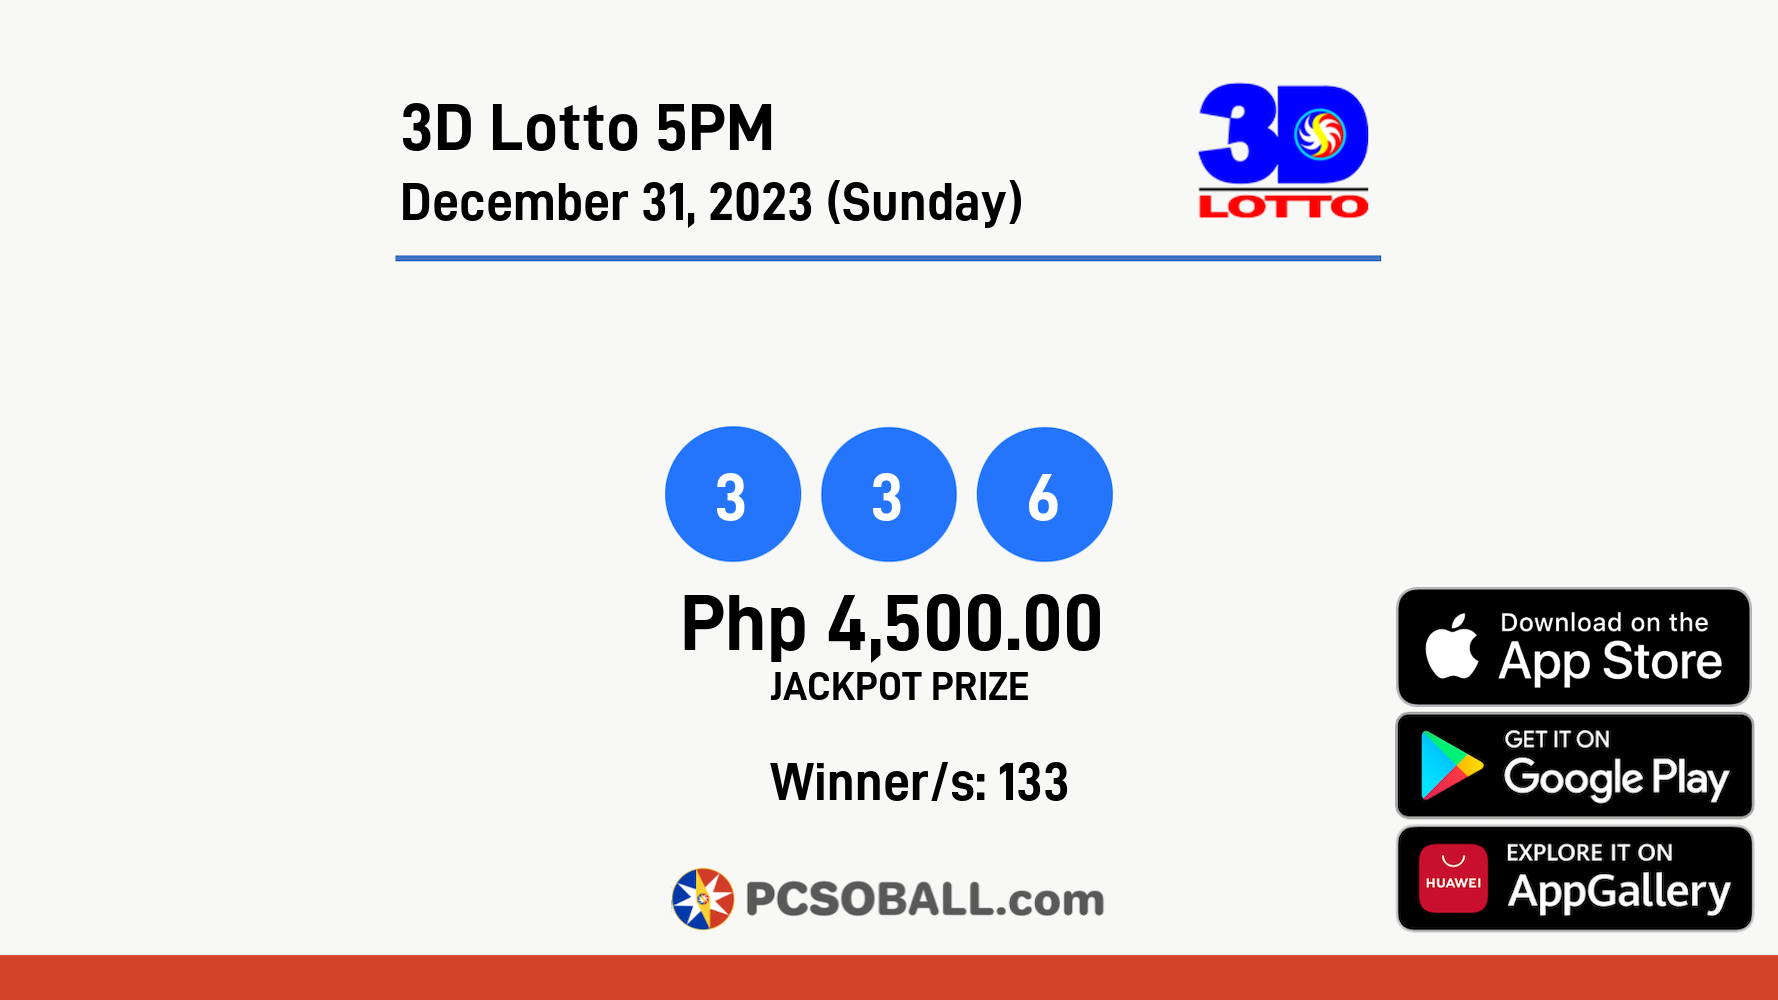 3D Lotto 5PM December 31, 2023 (Sunday) Result